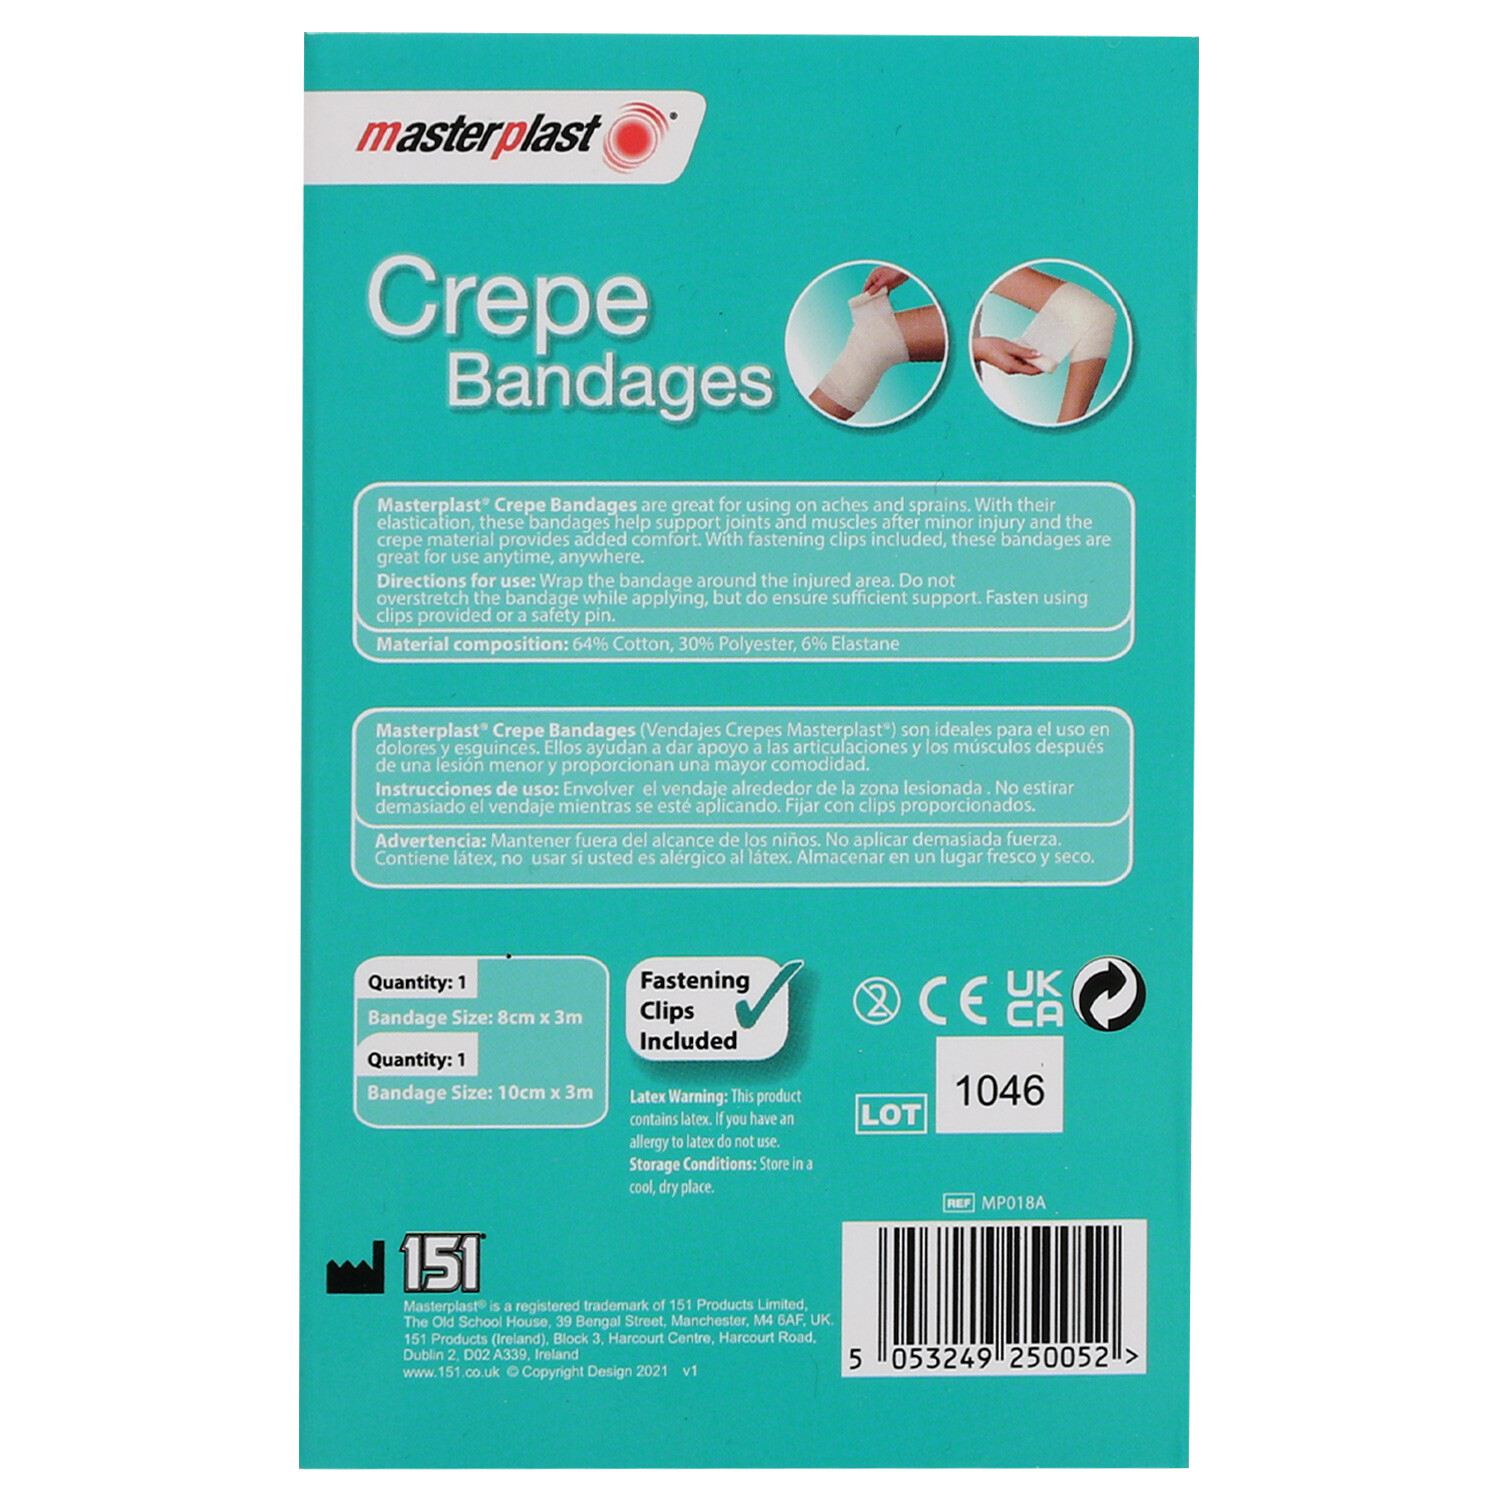 Pack of 2 Crepe Bandages - White Image 2